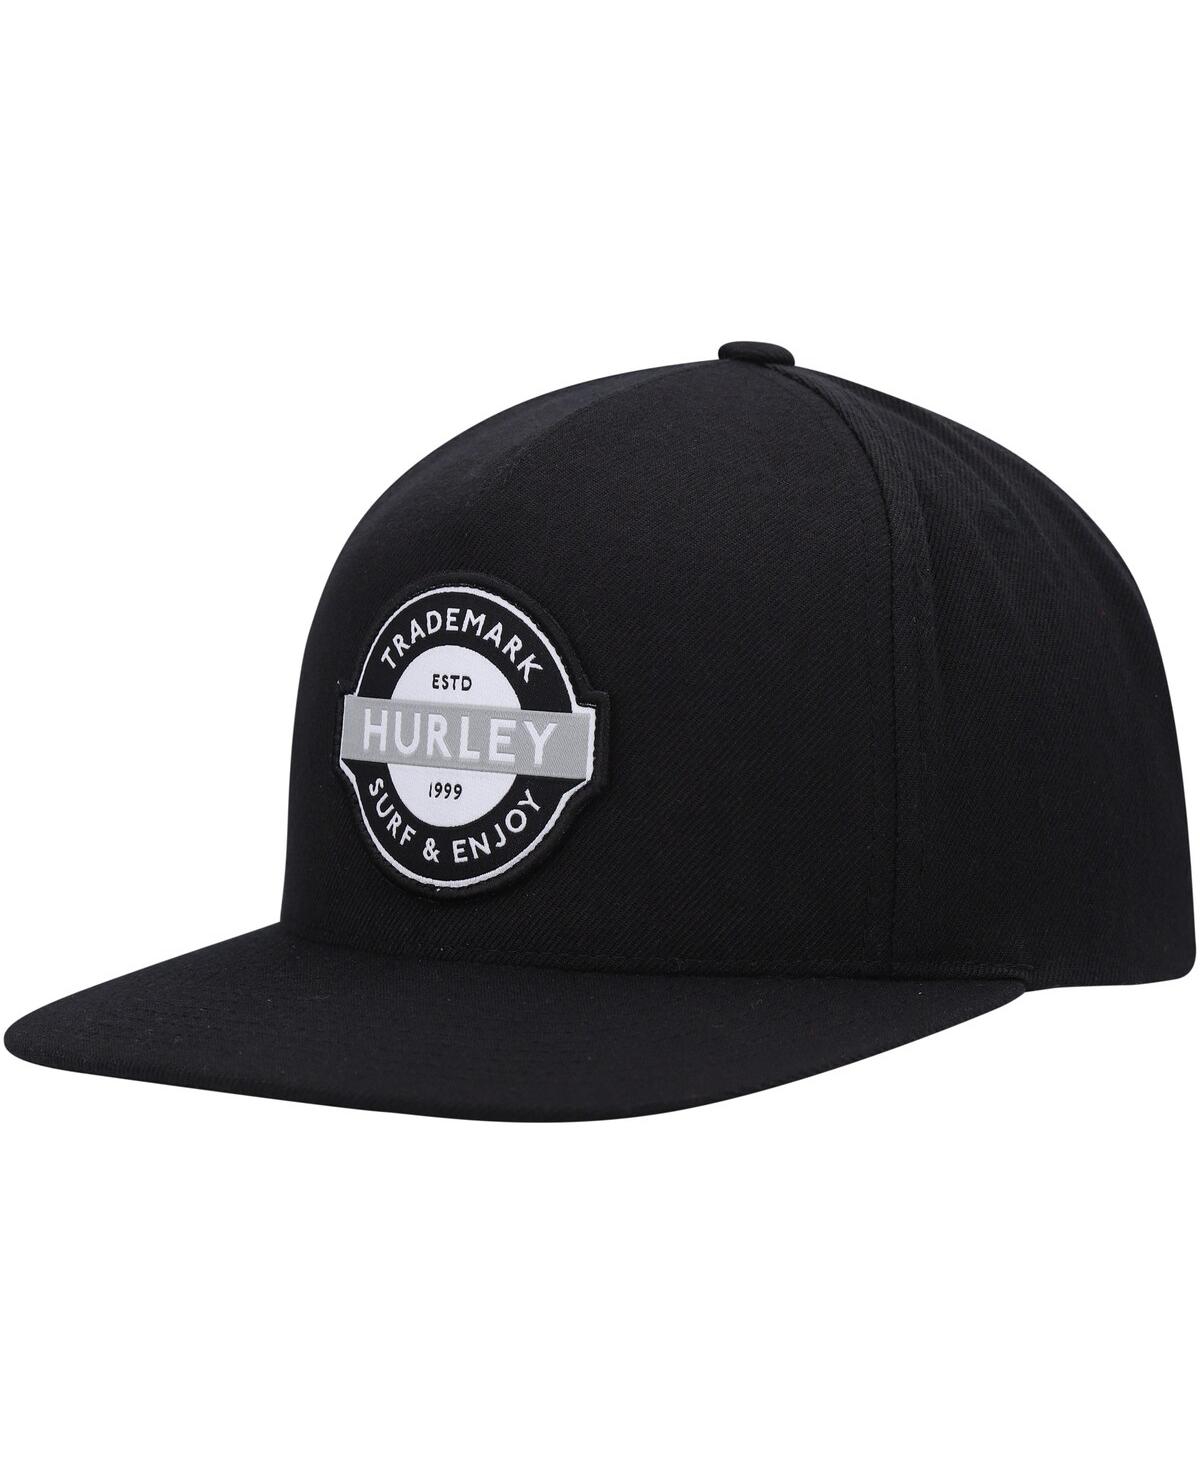 Men's Black Hurley Underground Snapback Hat - Black